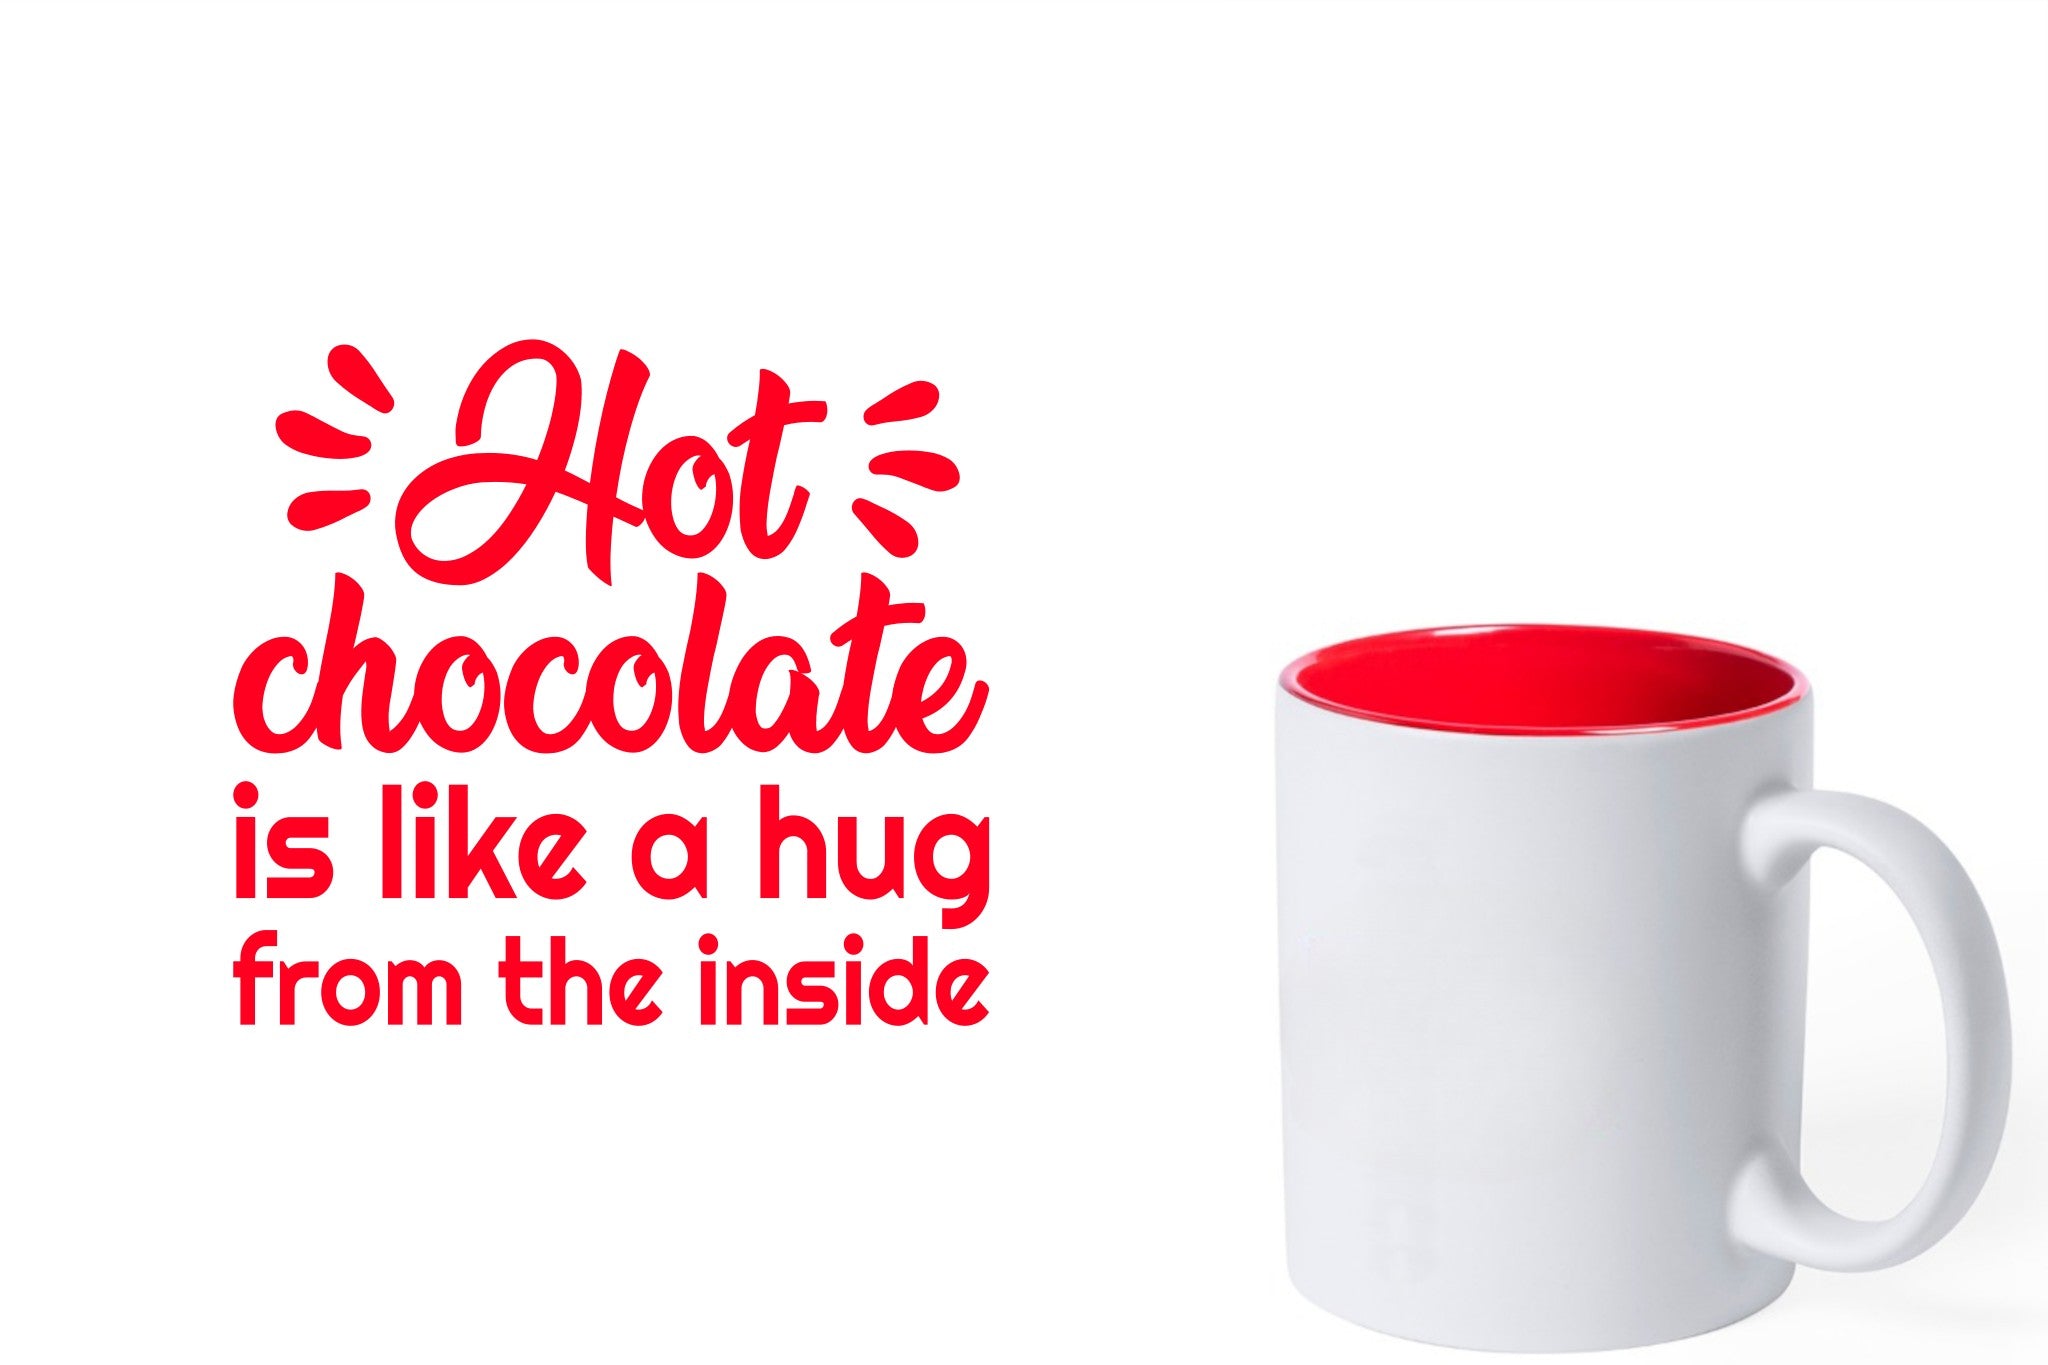 witte keramische mok met rode gravure  'Hot chocolate is like a hug from the inside'.